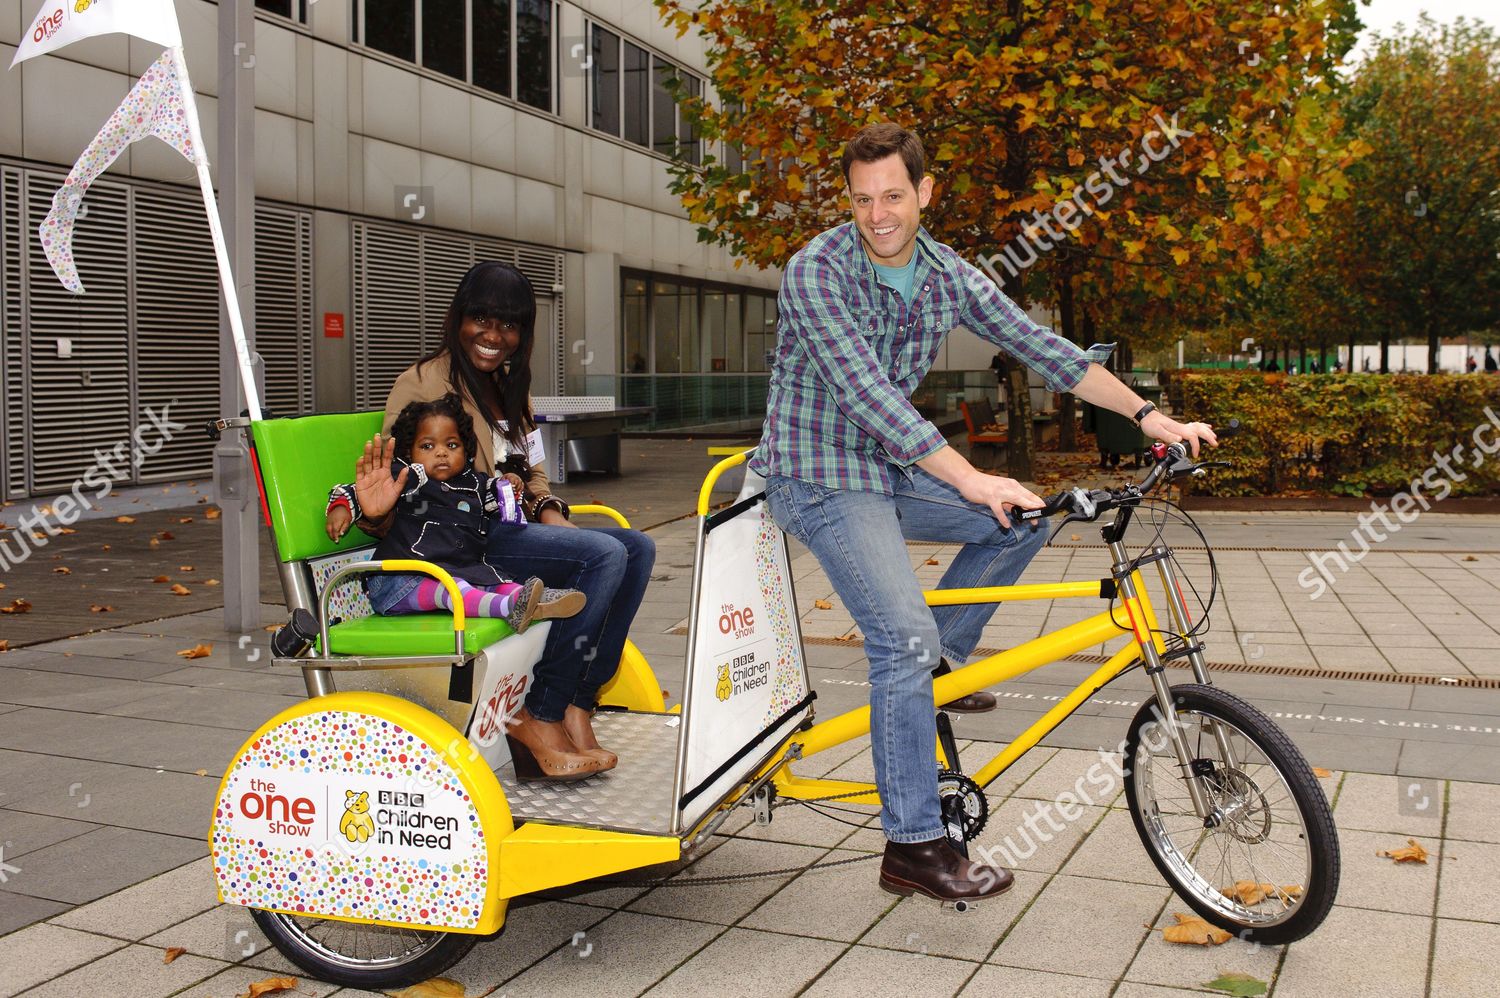 matt-baker-children-in-need-cycle-ride-london-britain-shutterstock-editorial-1489940k.jpg